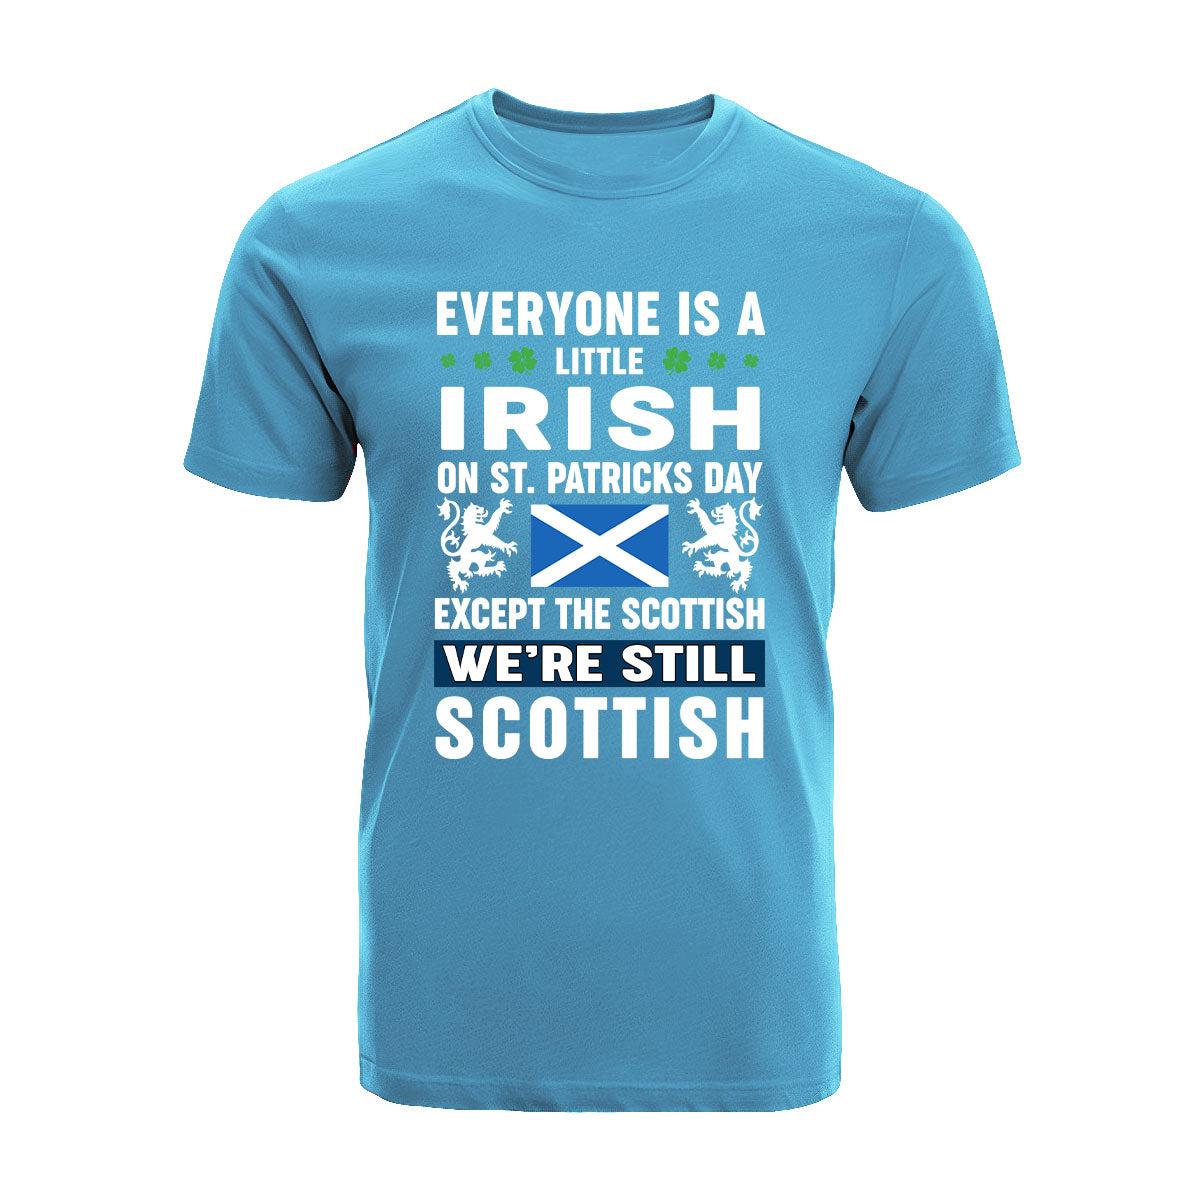 Irish on St Patrick's Day Except Scottish Unisex T-shirt